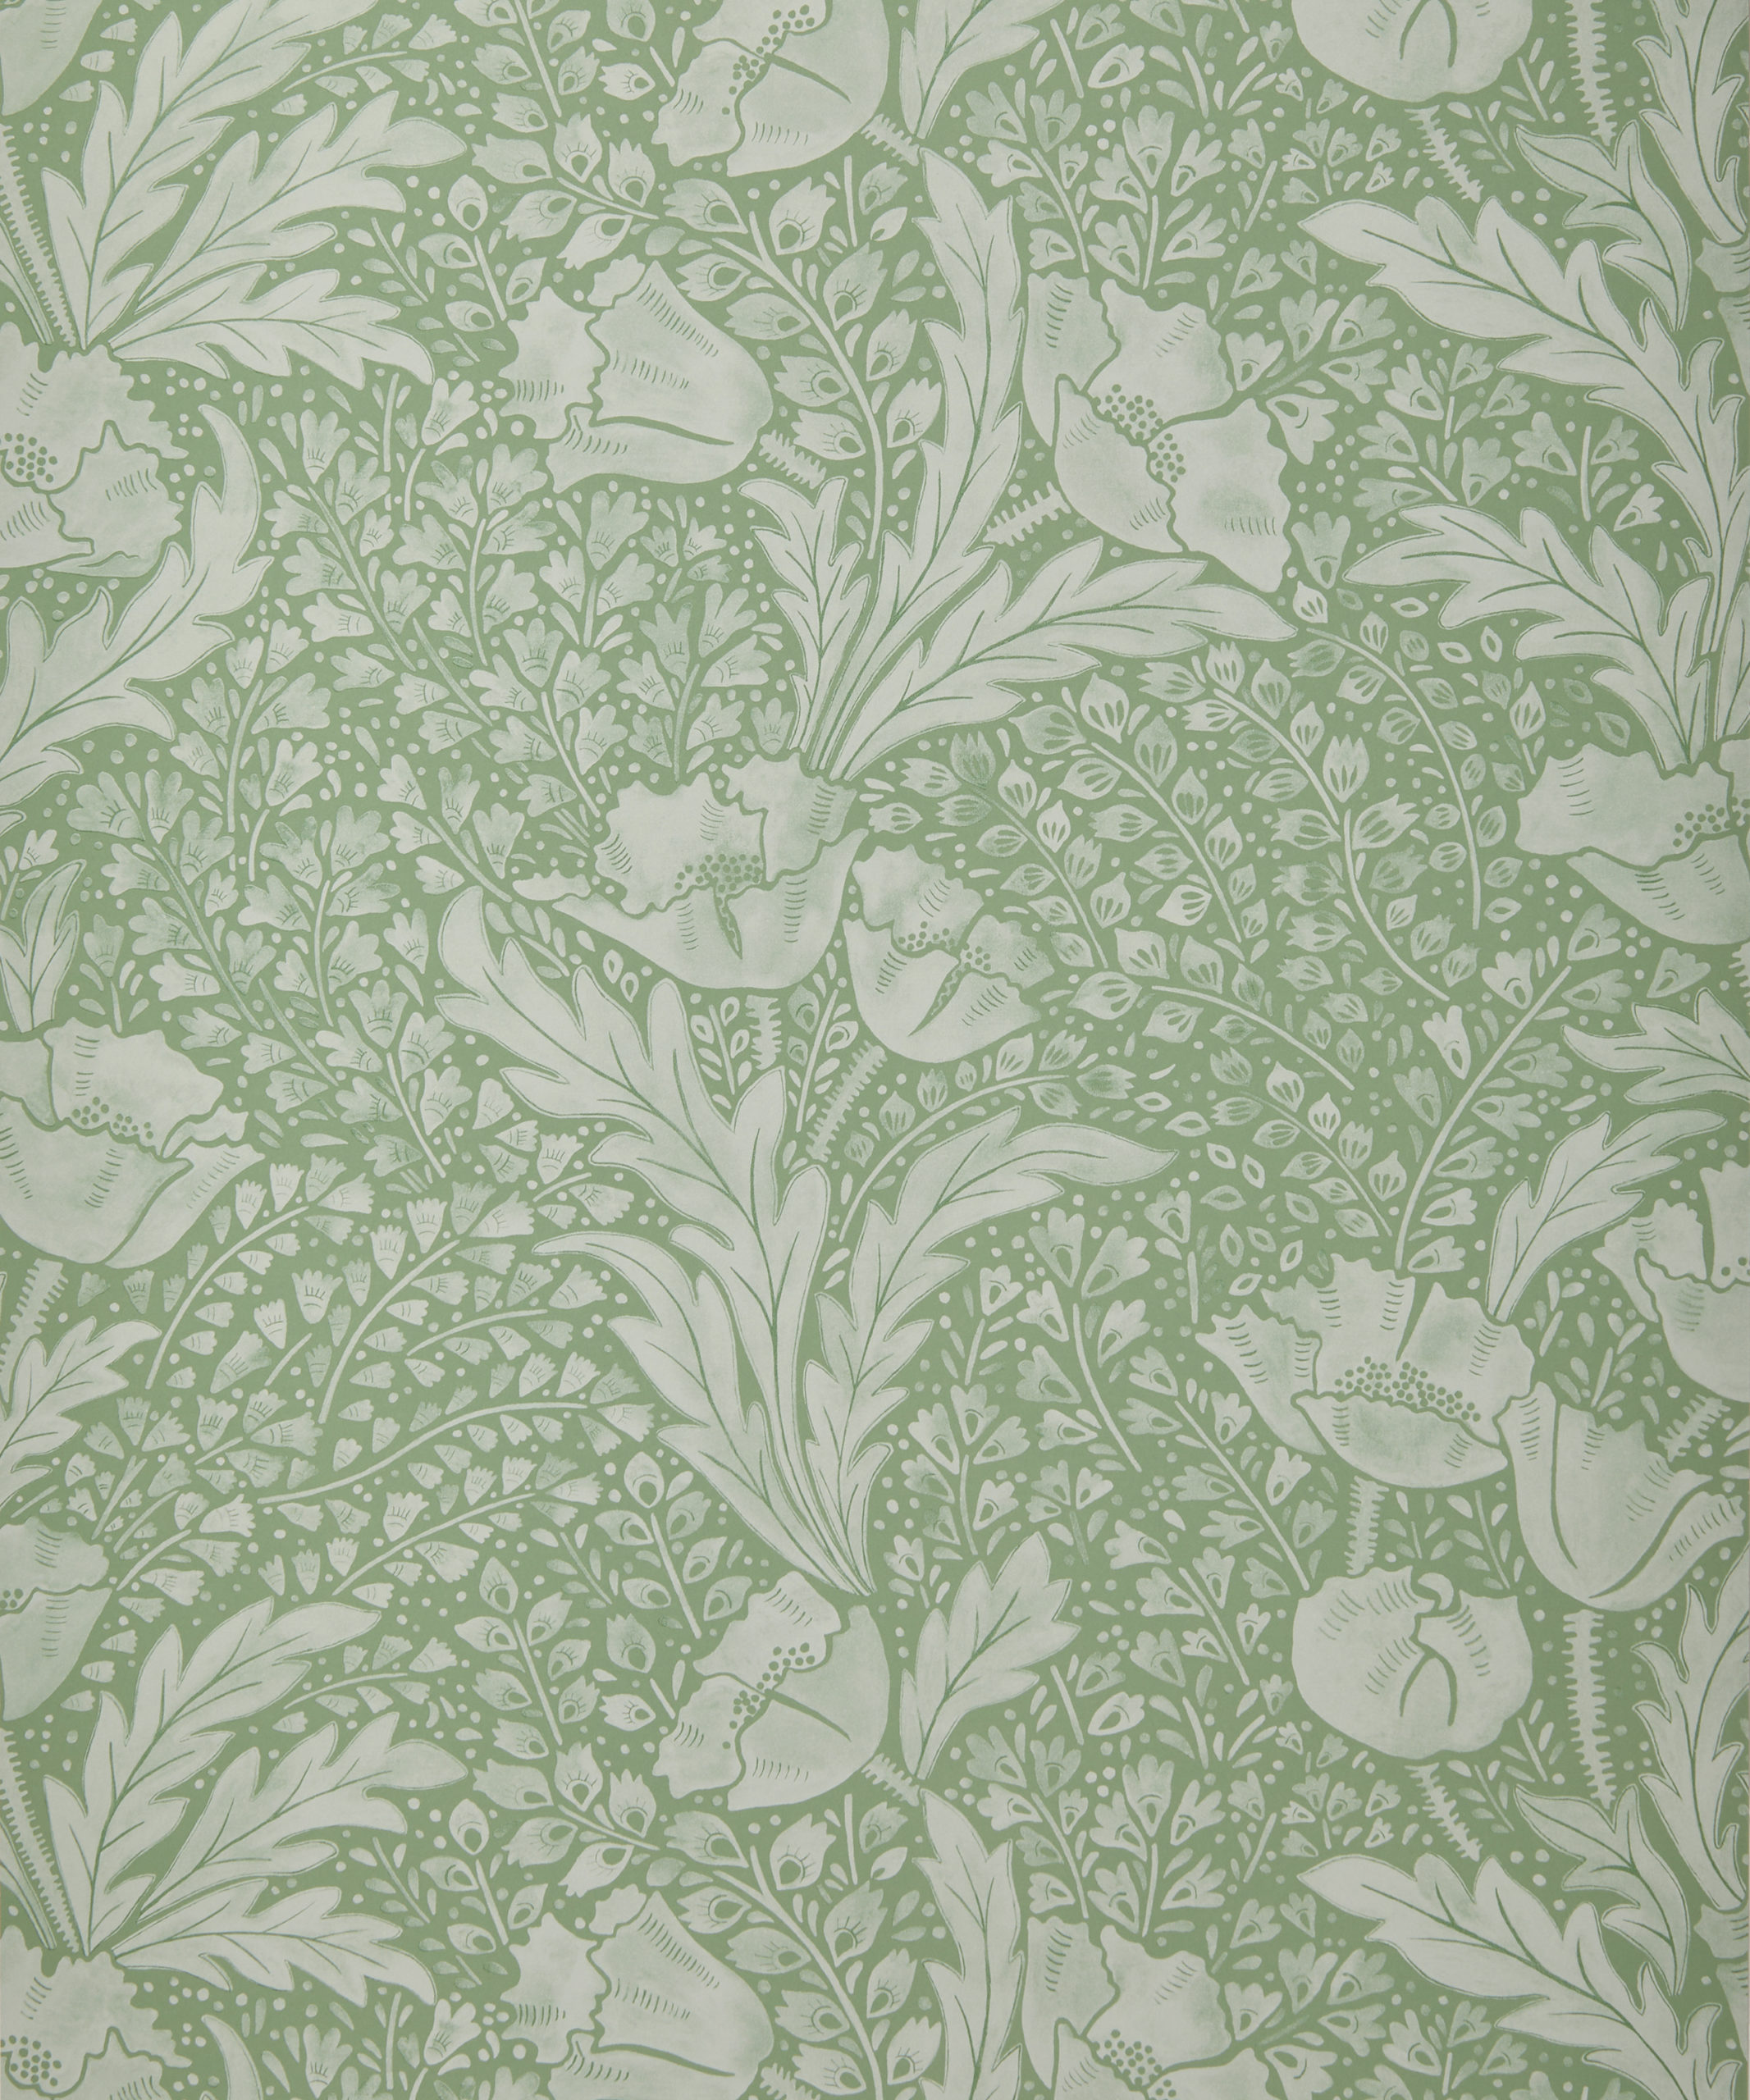 Tudor Poppy Wallpaper in Fern | Liberty Fabrics